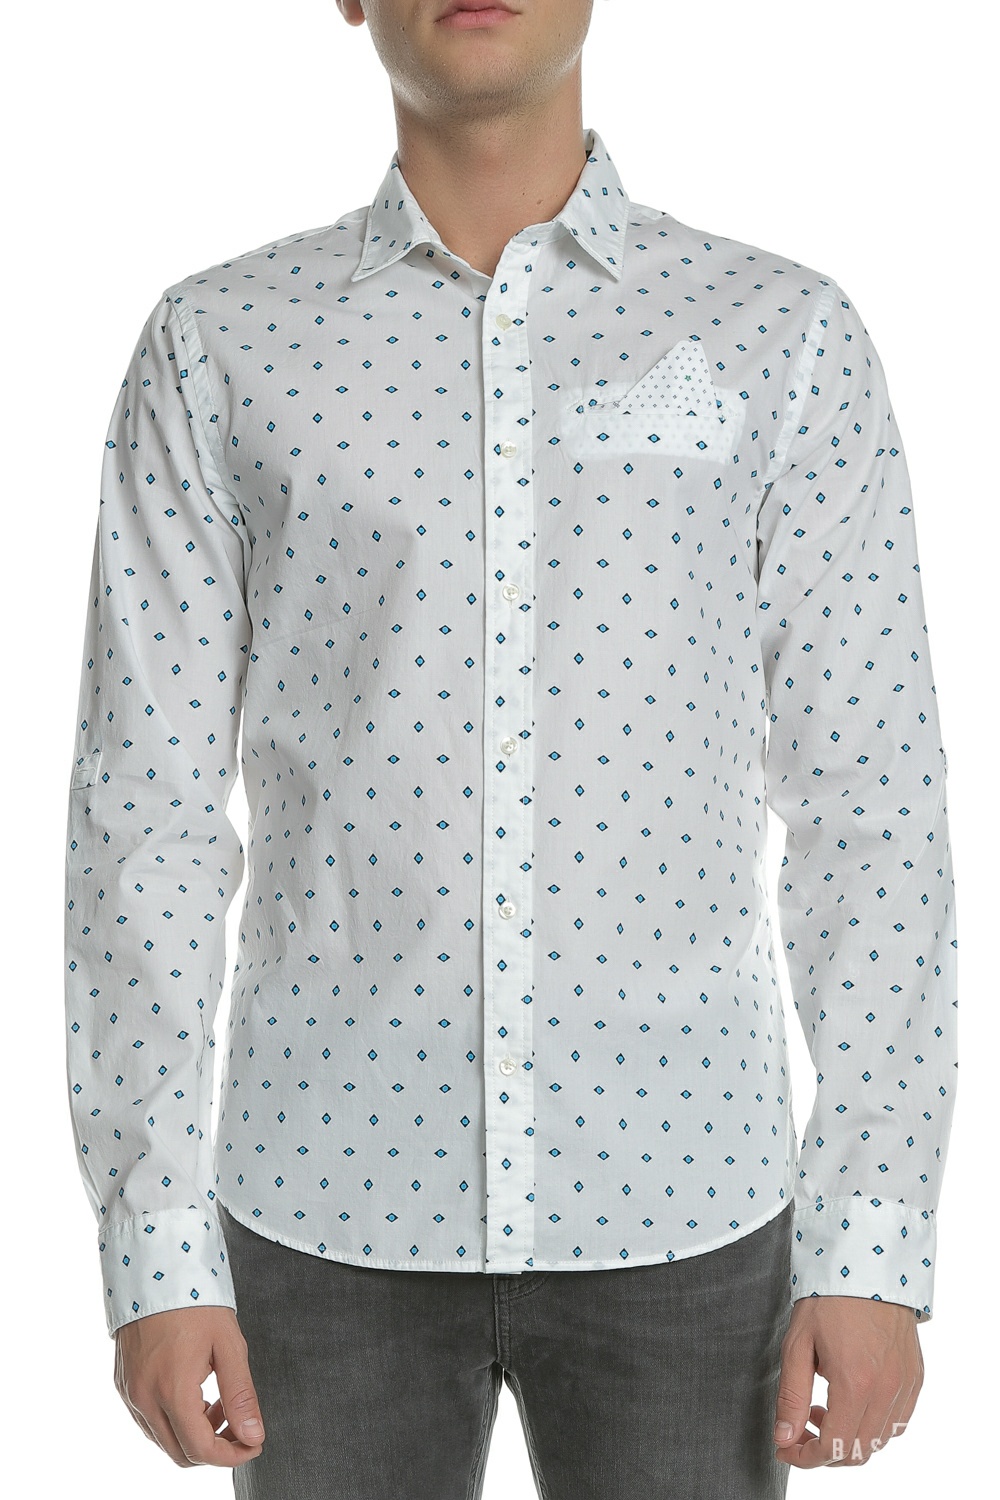 SCOTCH & SODA - Ανδρικό μακρυμάνικο πουκάμισο SCOTCH & SODA λευκό με print Ανδρικά/Ρούχα/Πουκάμισα/Μακρυμάνικα